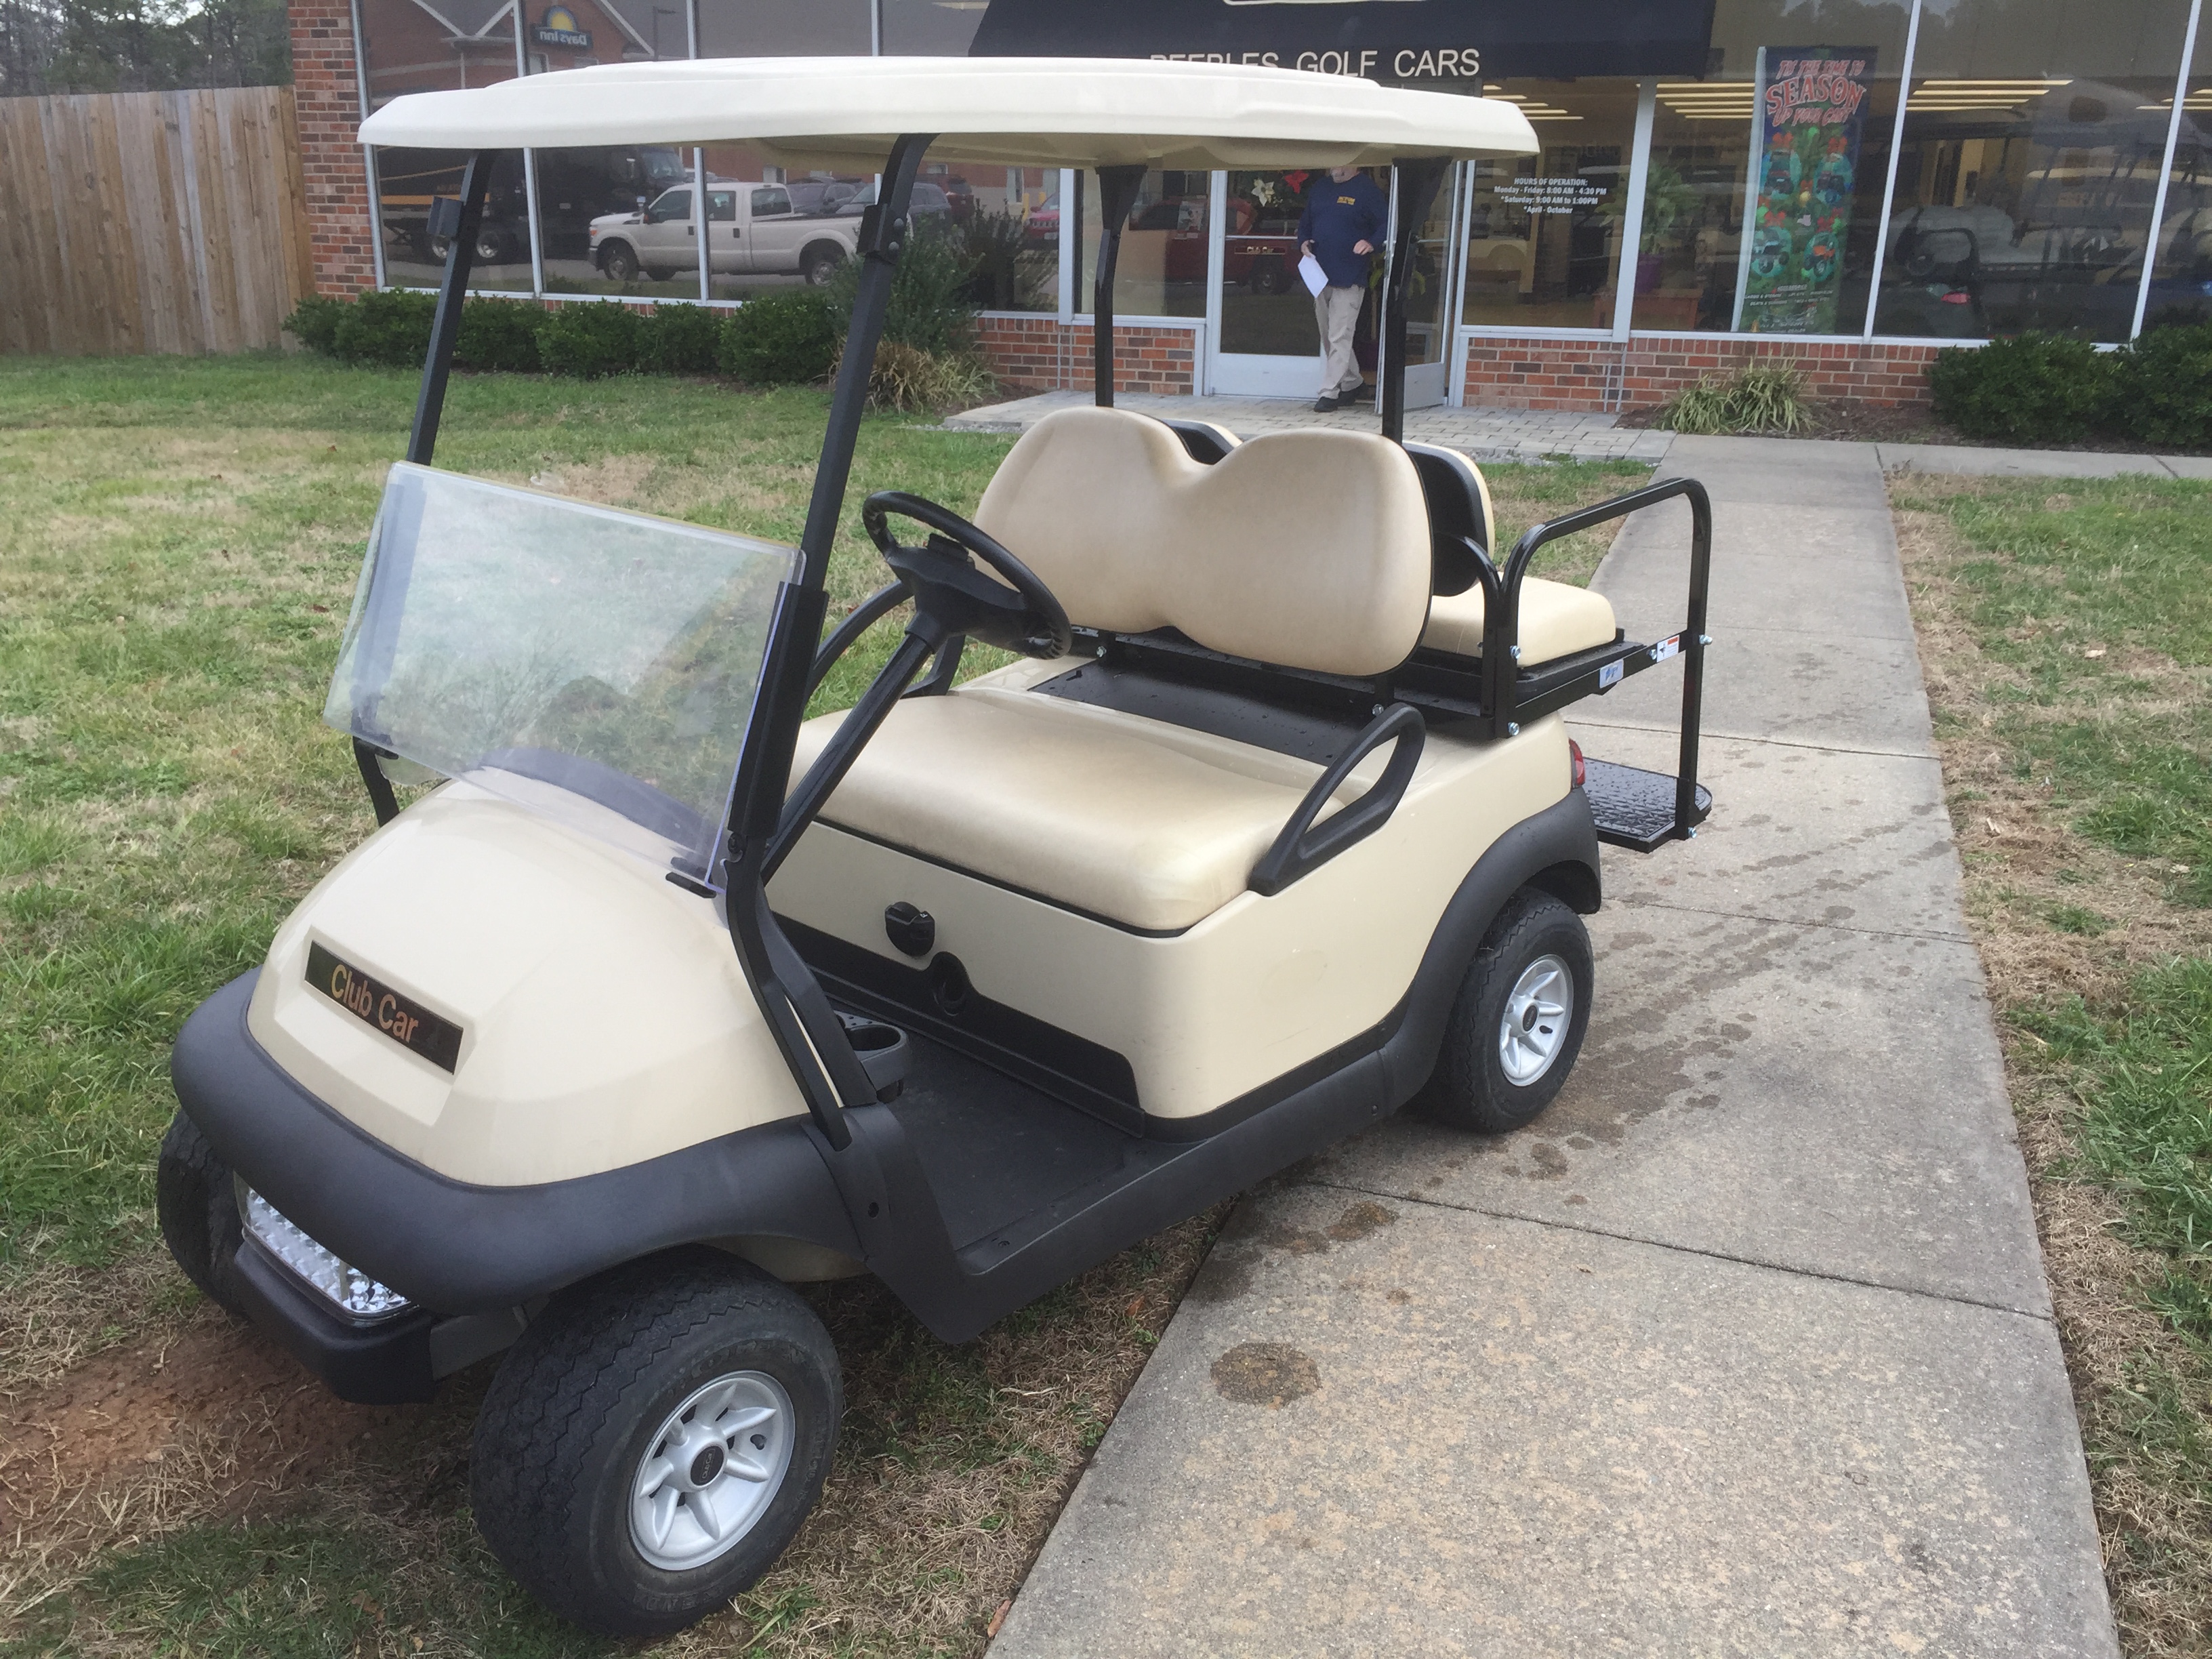 artery Spooky Appal 2015 Club Car Electric Golf Car- Beige | Peebles Golf Cars